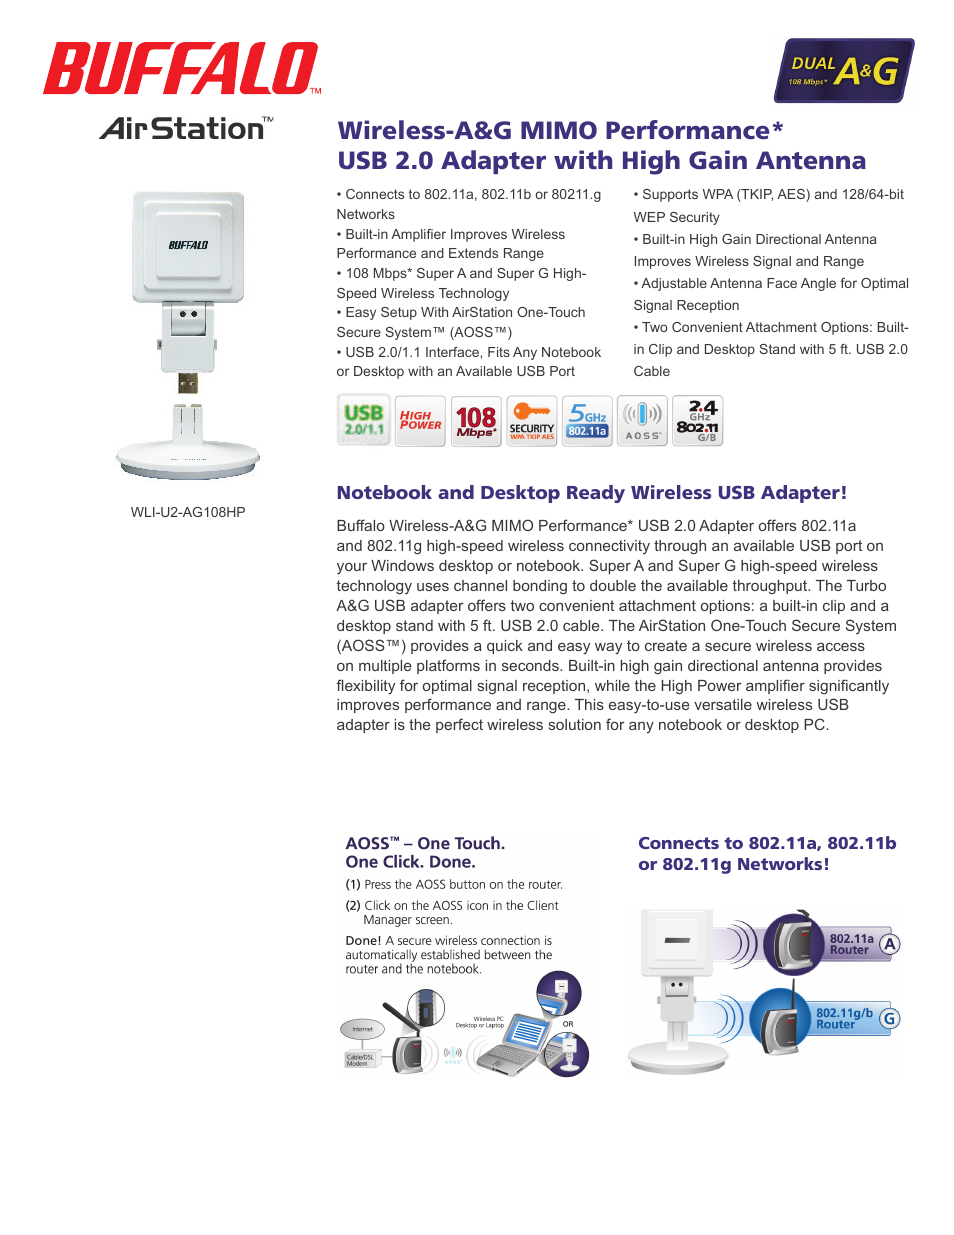 Buffalo AirStation Turbo A&G Wireless USB 2.0 Adapter WLI-U2-AG108HP